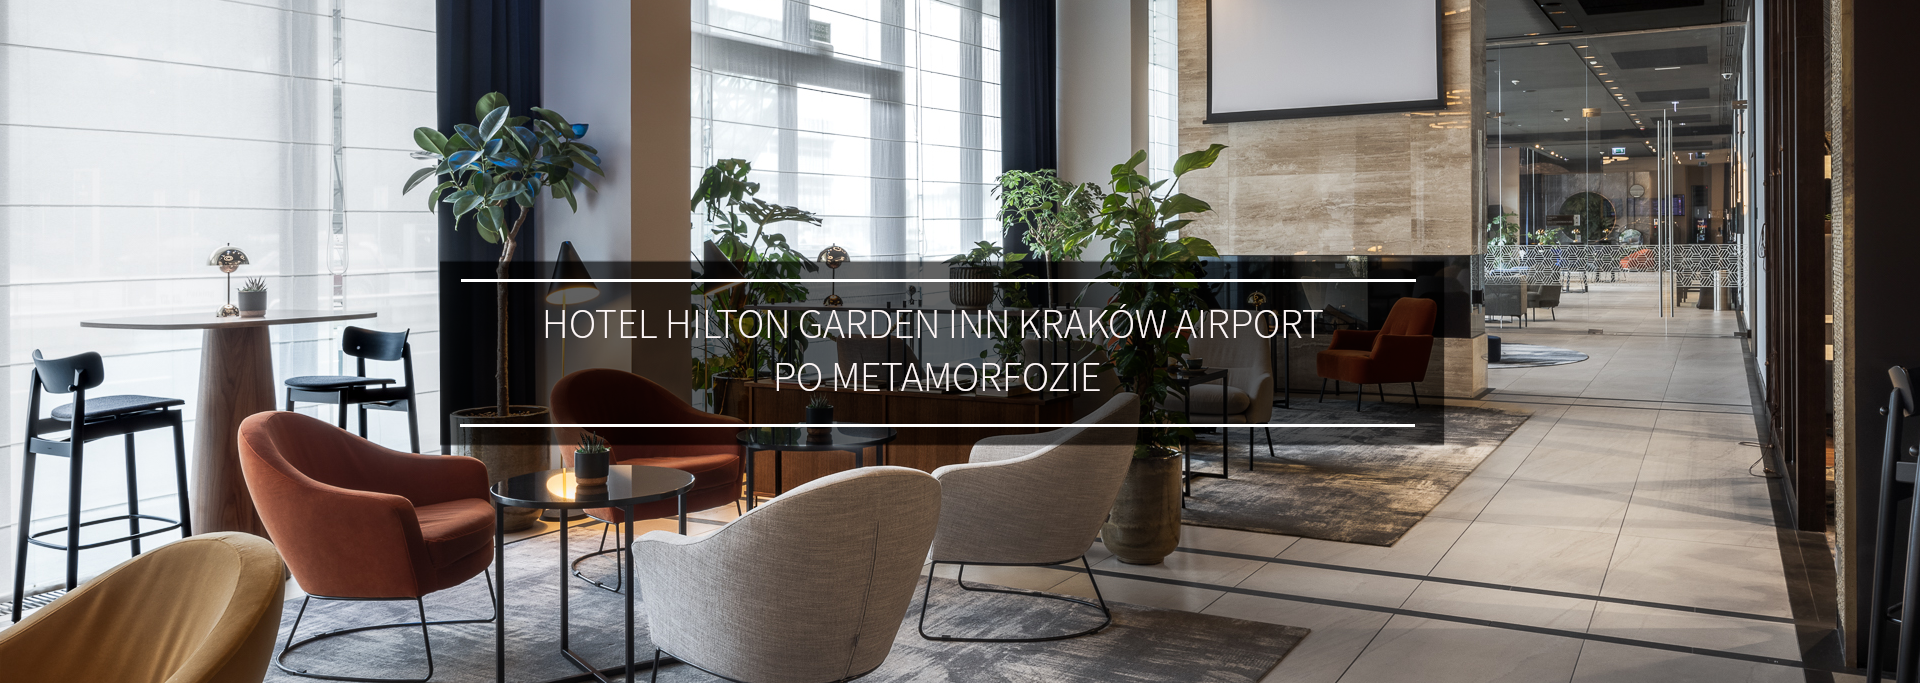 Hotel Hilton Garden Inn Kraków Airport po metamorfozie